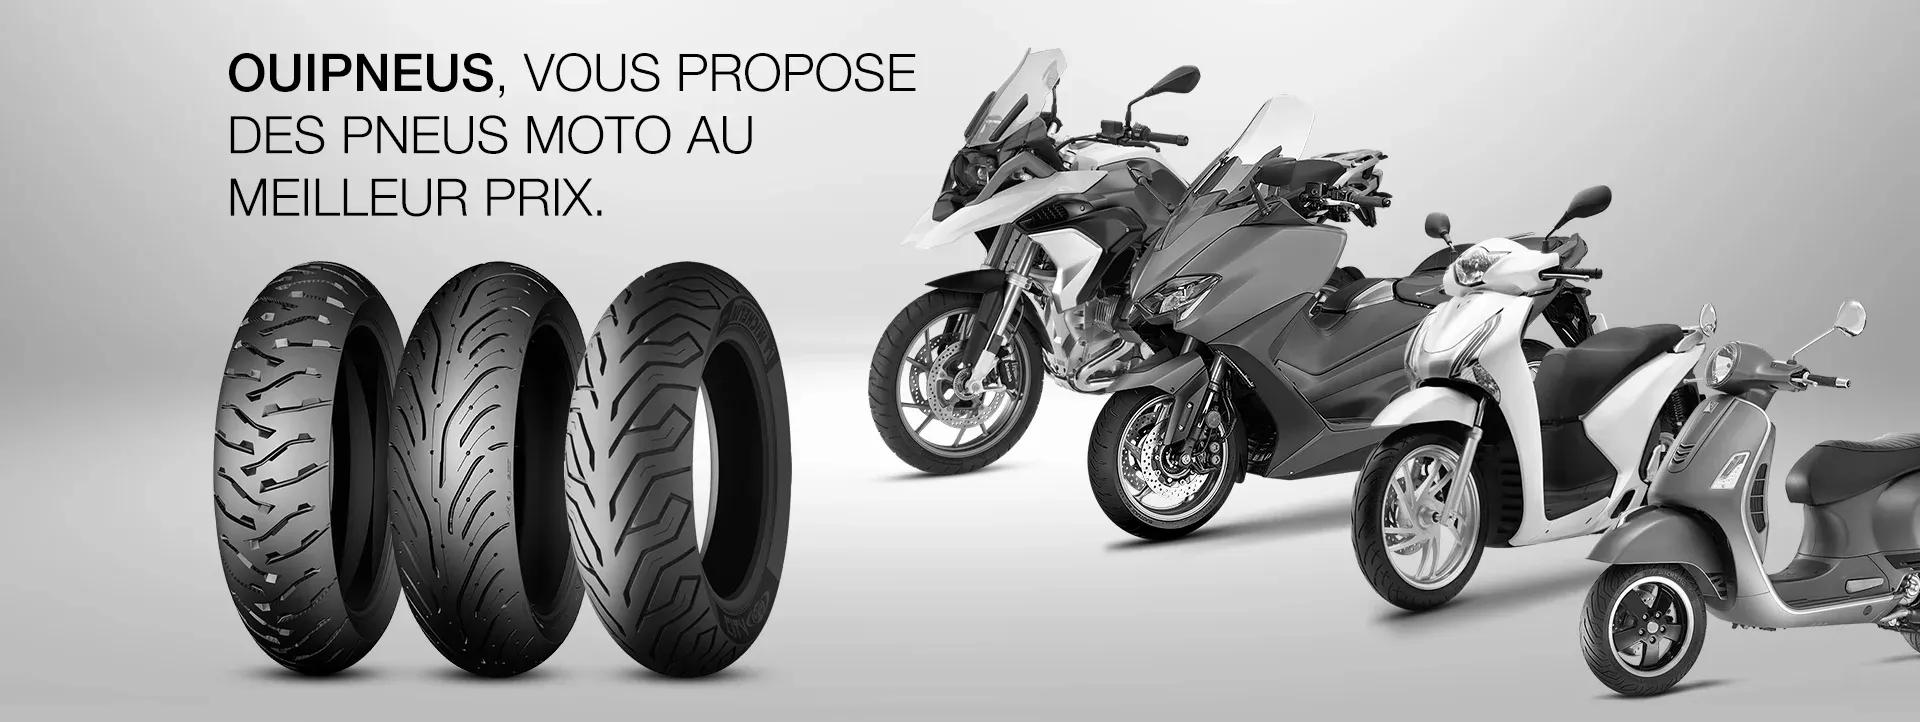 Acier Poids 4,4 kg Lingjiushopping Pneu de Moto à Monter sur pneus Matériau 